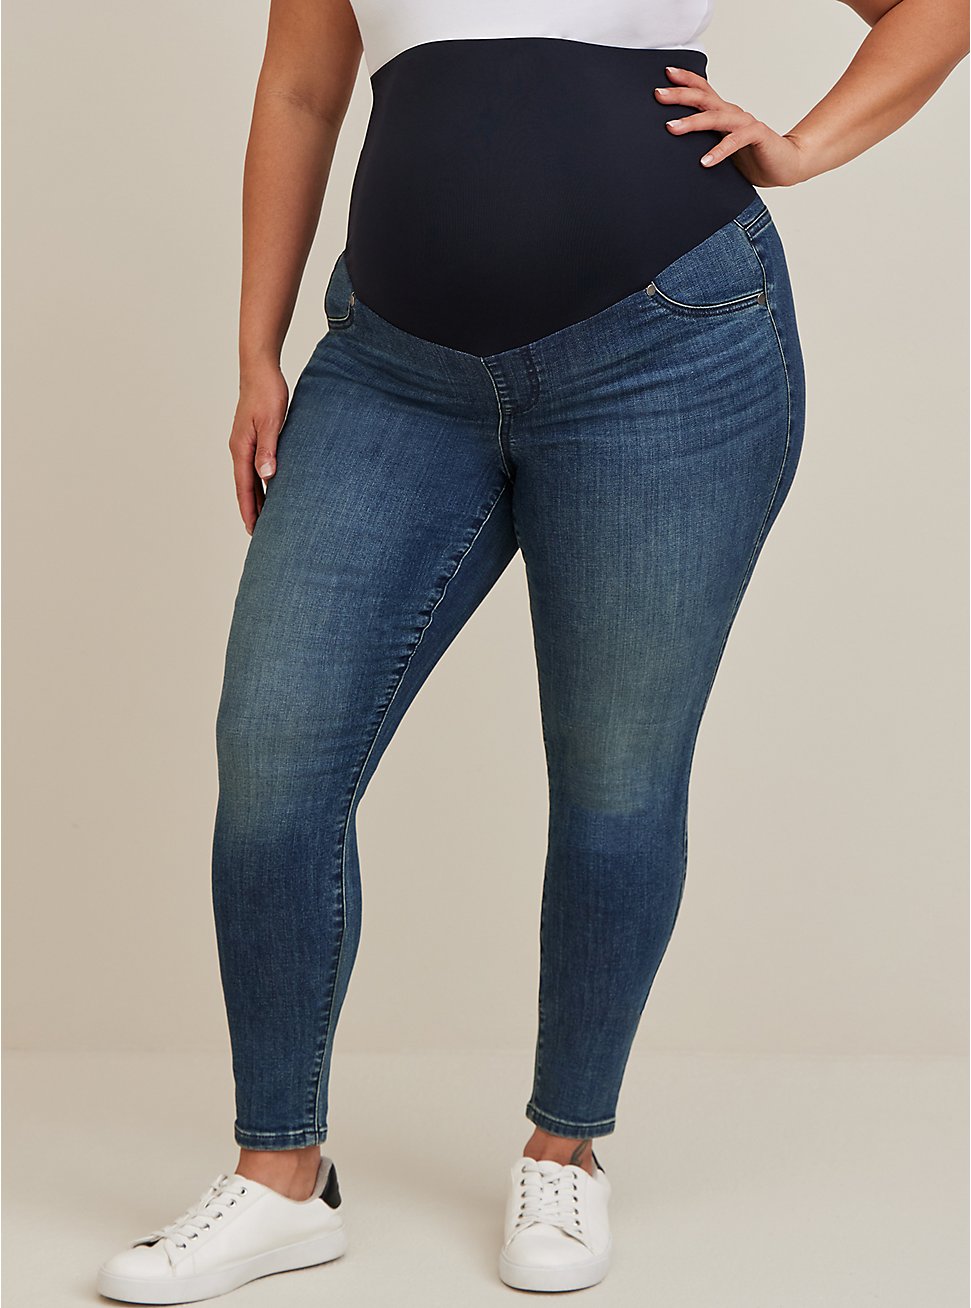 Blue 38                  EU discount 97% WOMEN FASHION Jeans Strech Caroll Jeggings & Skinny & Slim 